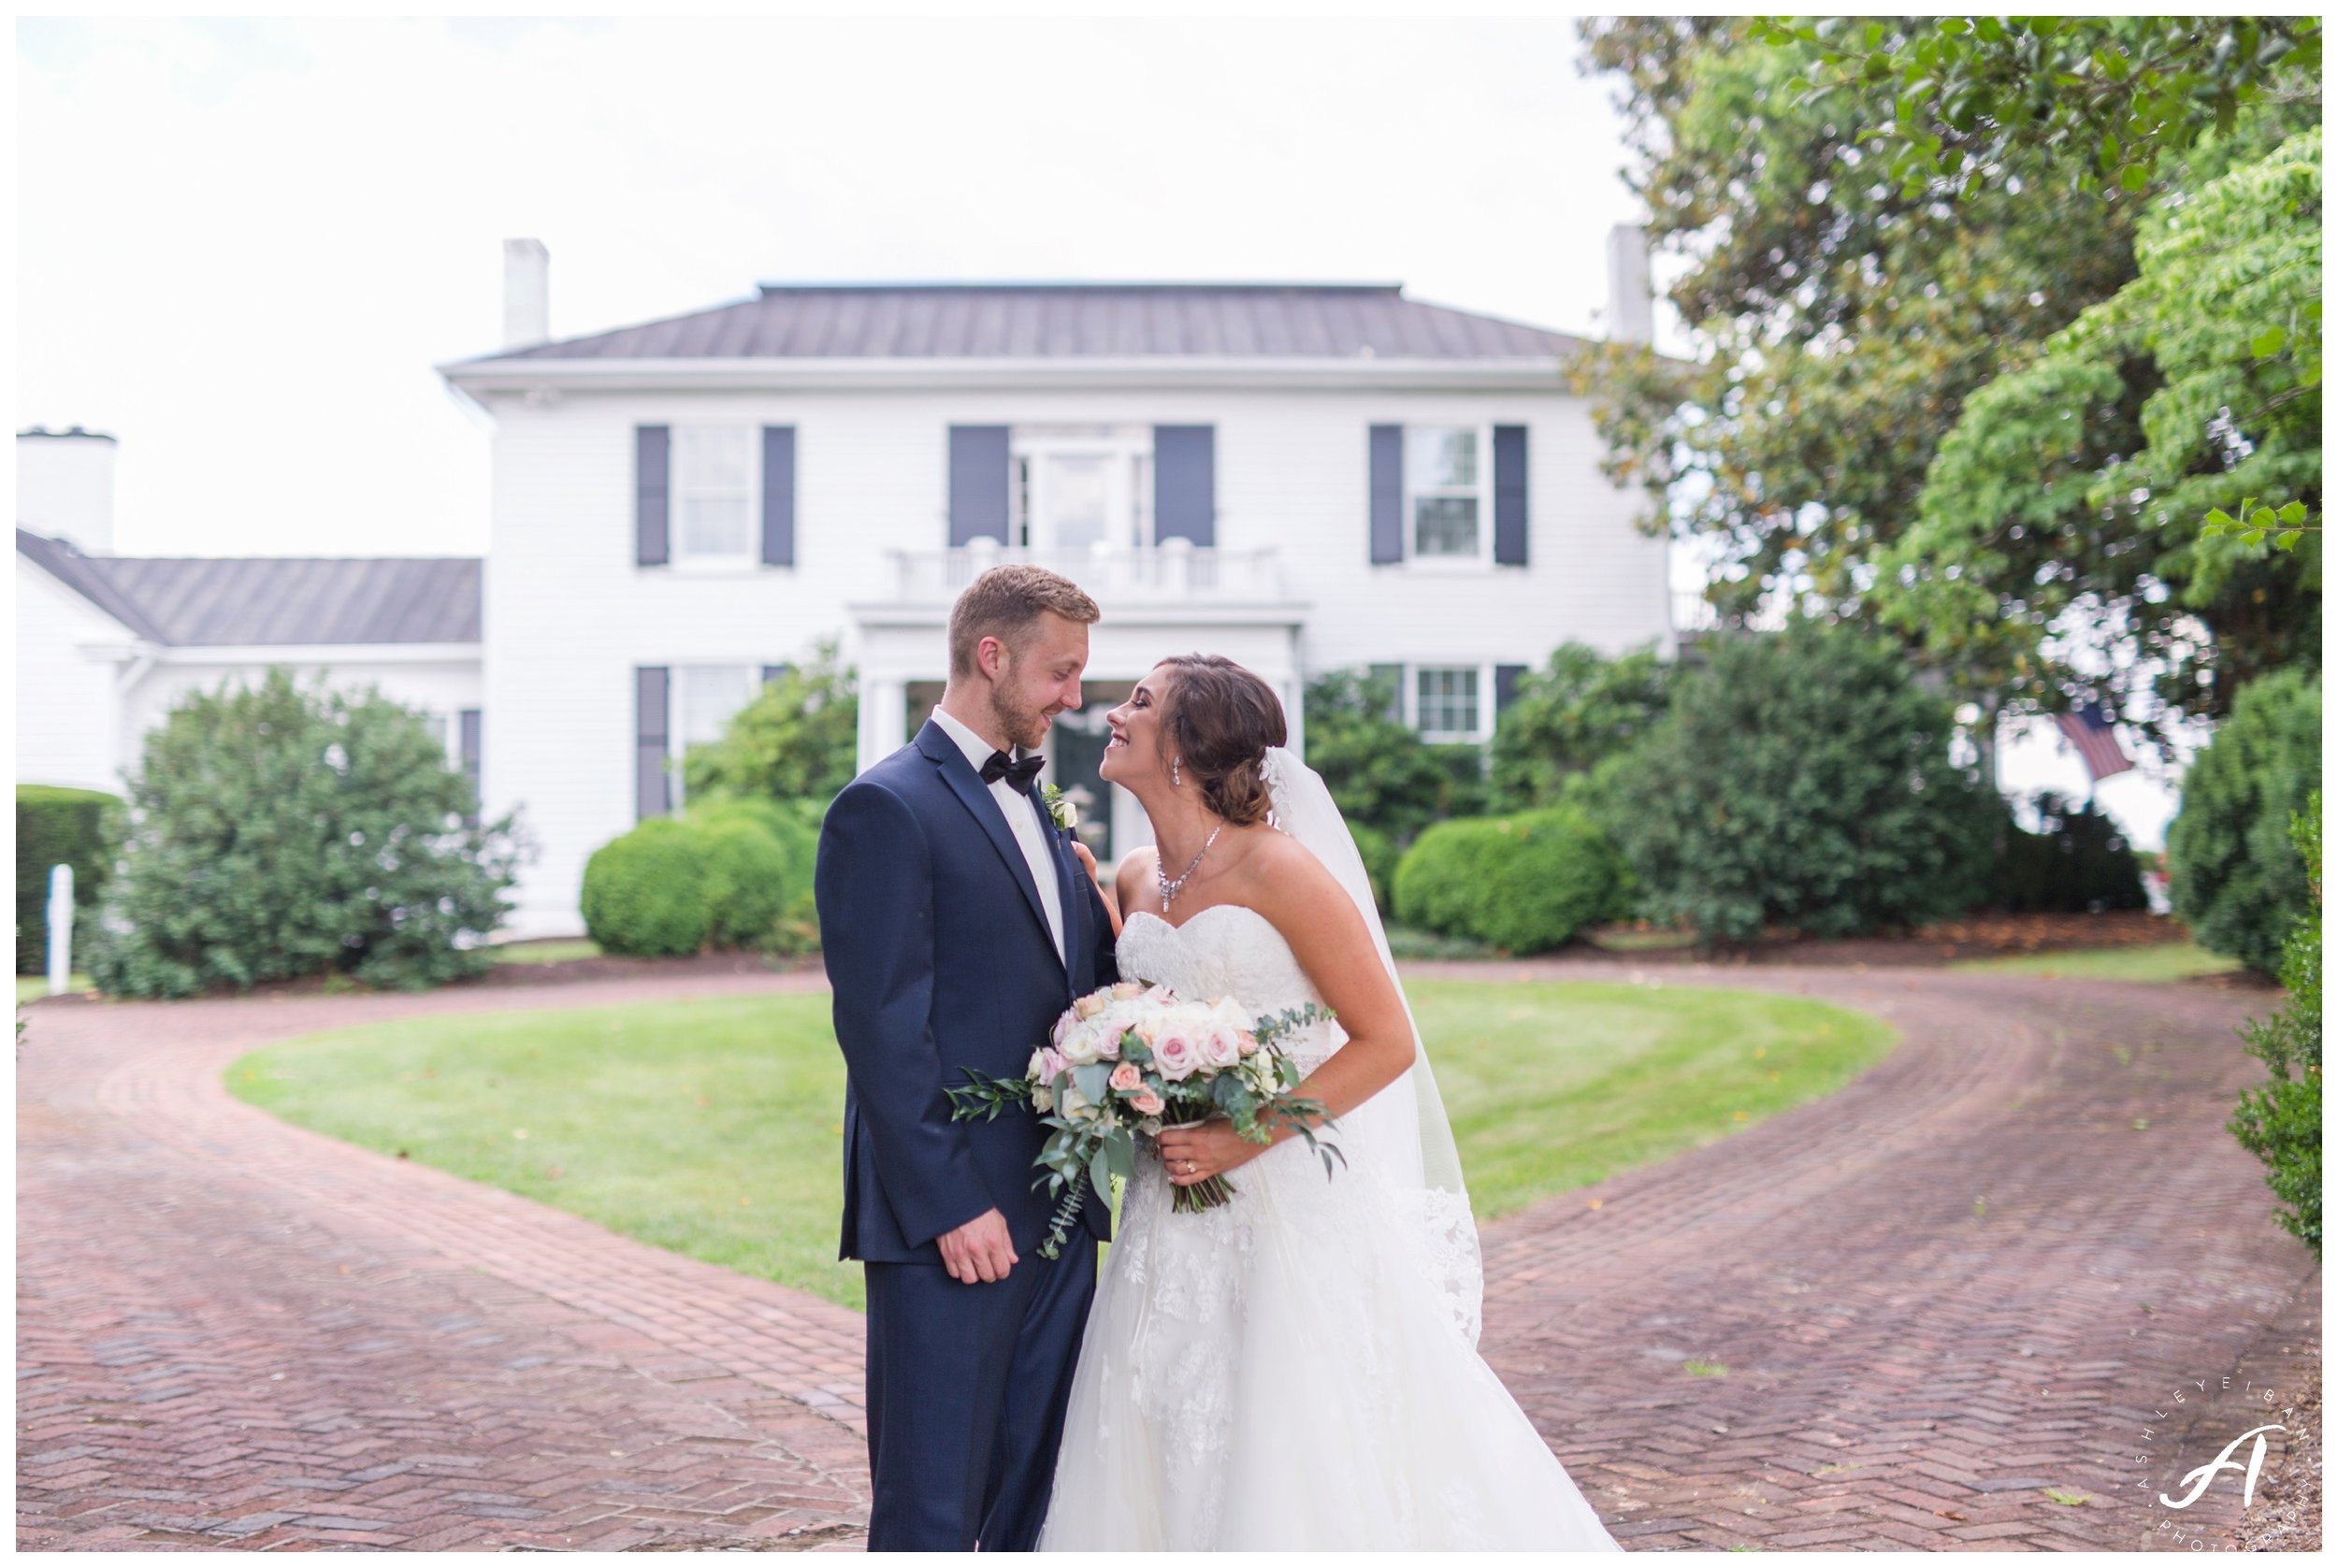 Charlottesville and Lynchburg Wedding Photography at The Trivium Estate || www.ashleyeiban.com